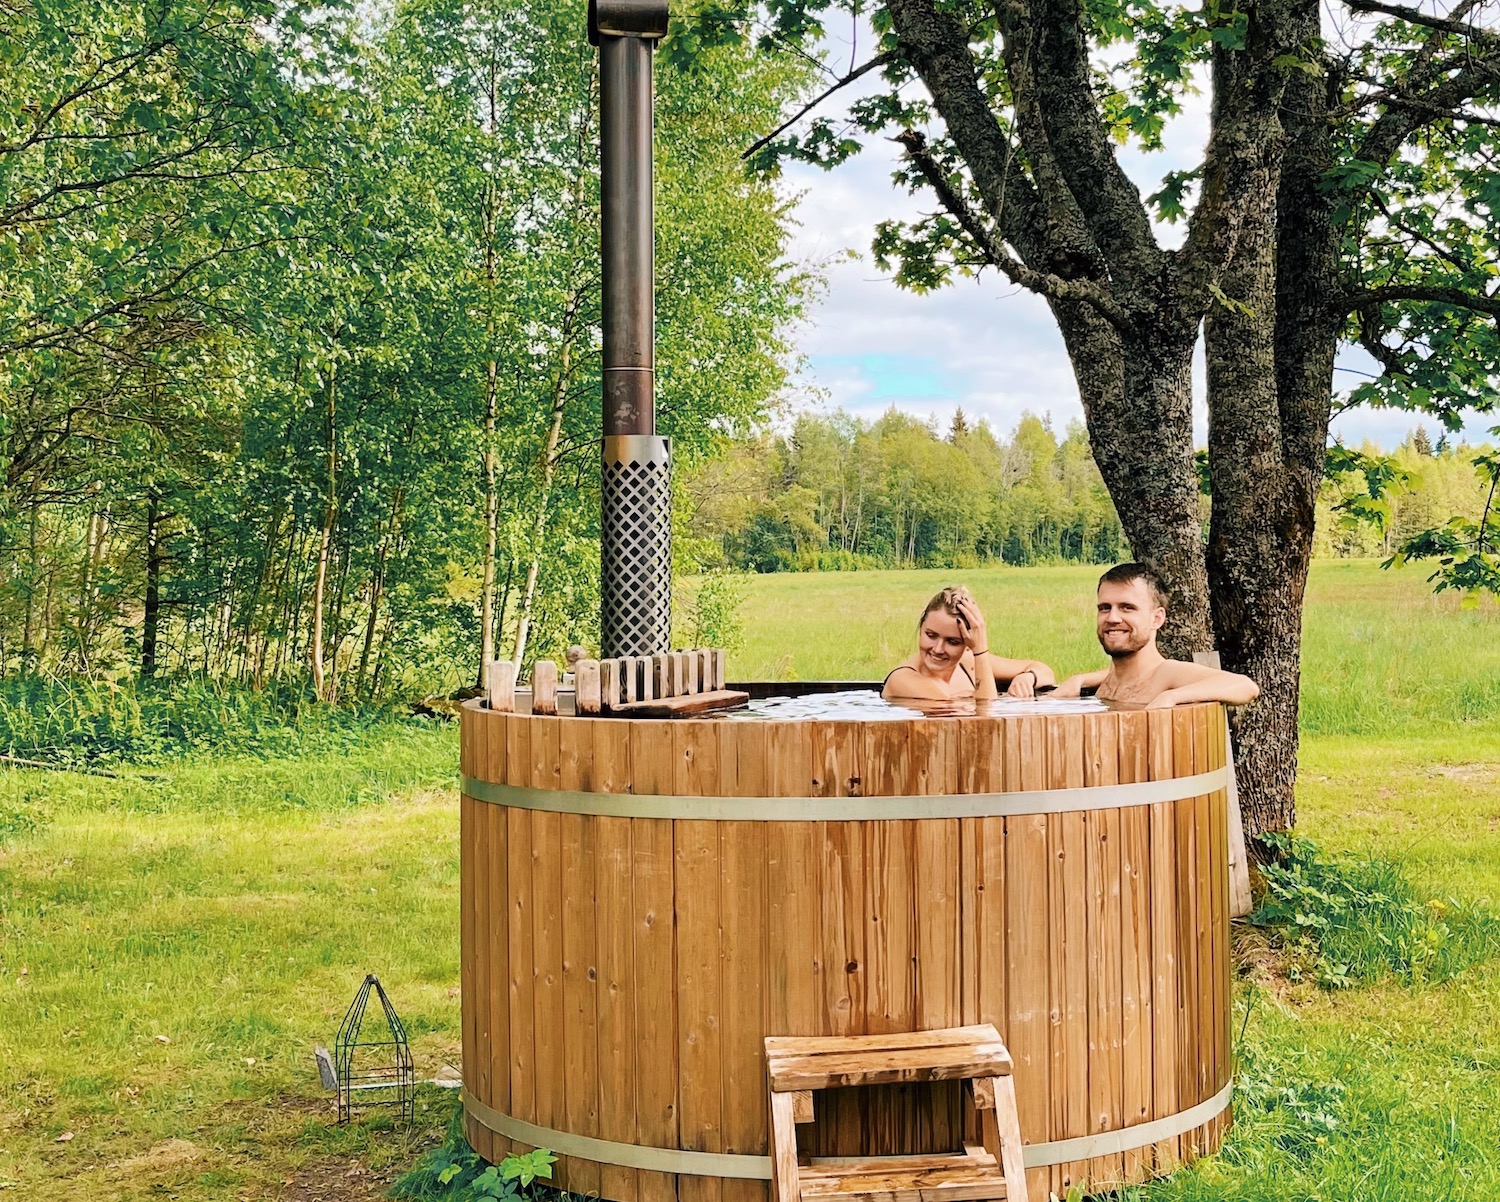 Accommodation with a hot tub in Estonia, Hallika talu, Eesti Paigad